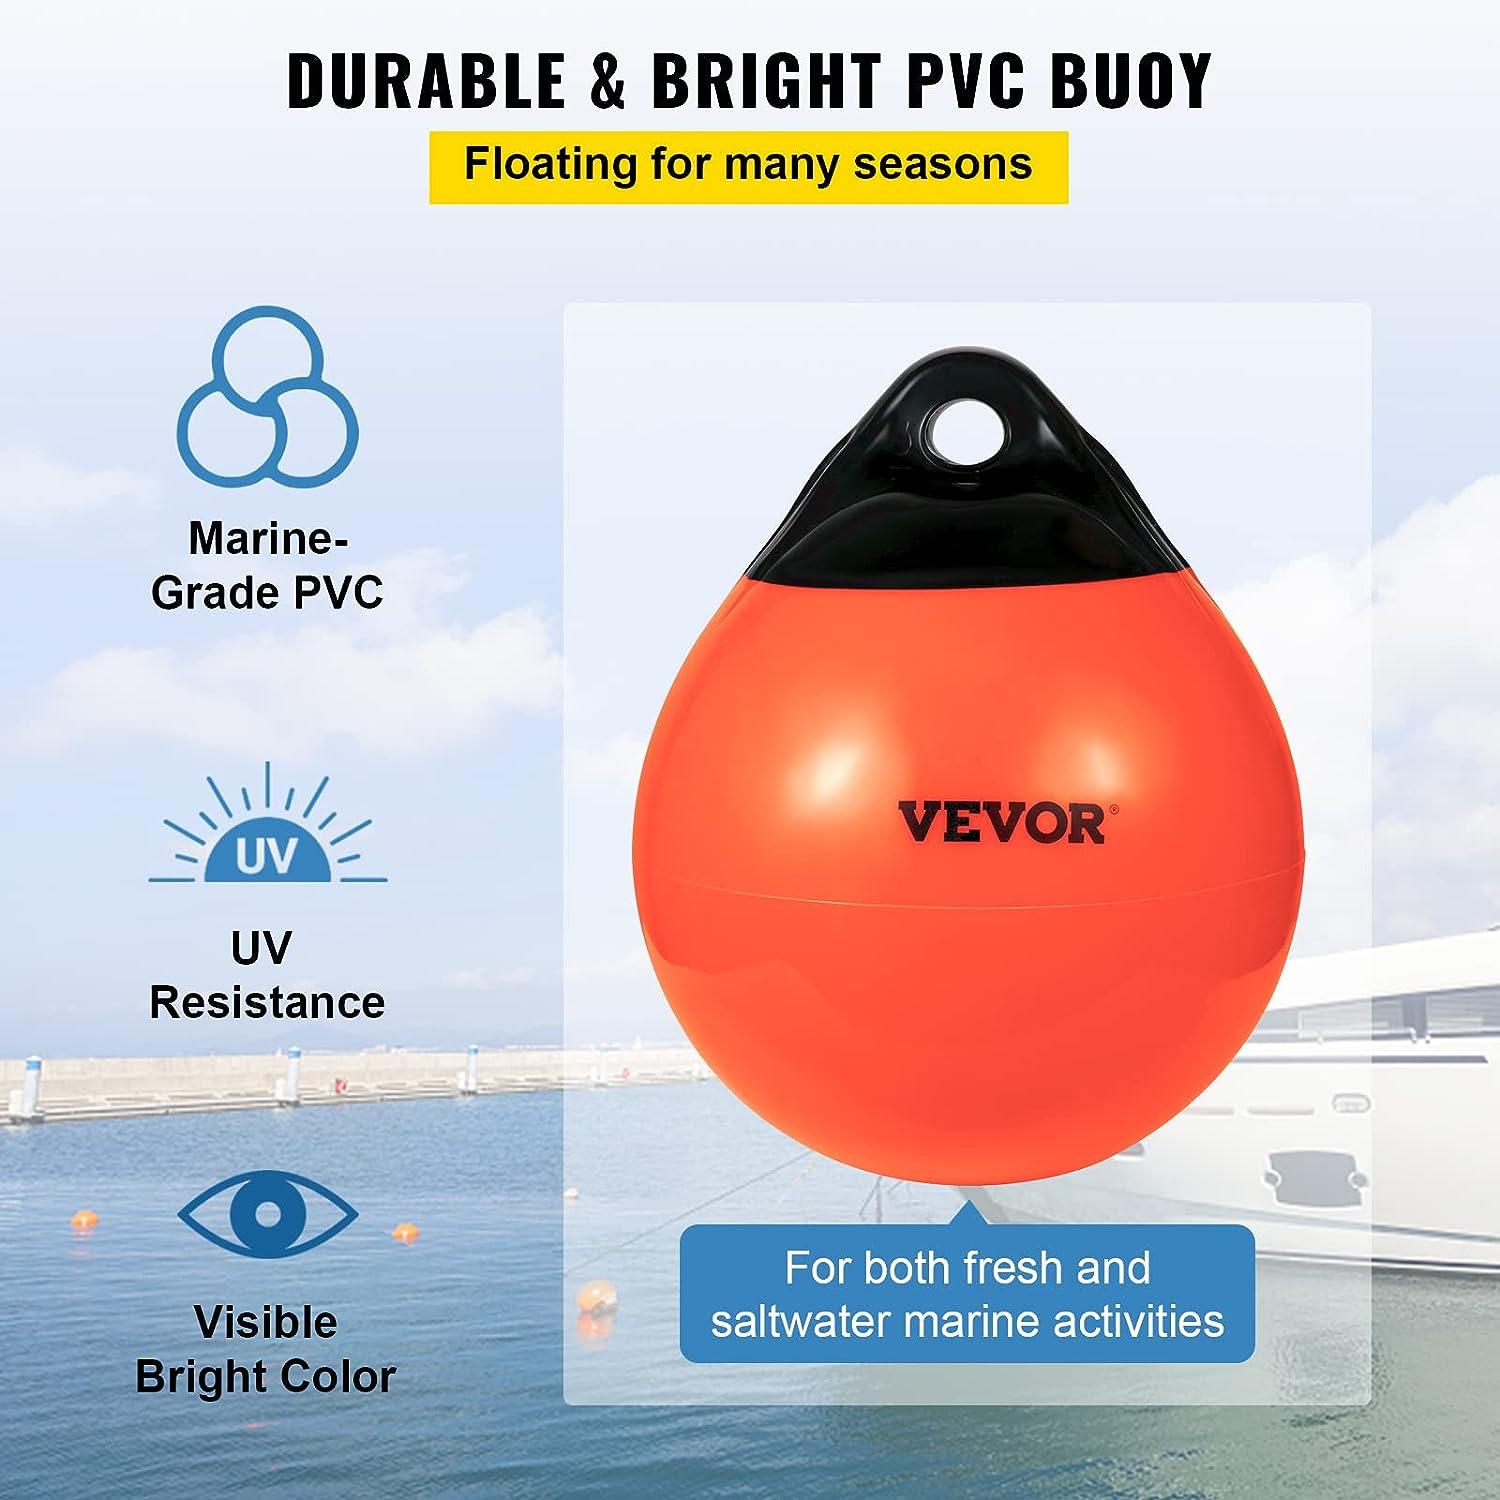 VEVOR Boat Buoy Balls, 15 Diameter Inflatable Heavy-Duty Marine-Grade PVC Marker  Buoys, Round Boat Mooring Buoys, Anchoring, Rafting, Marking, Fishing,  Orange